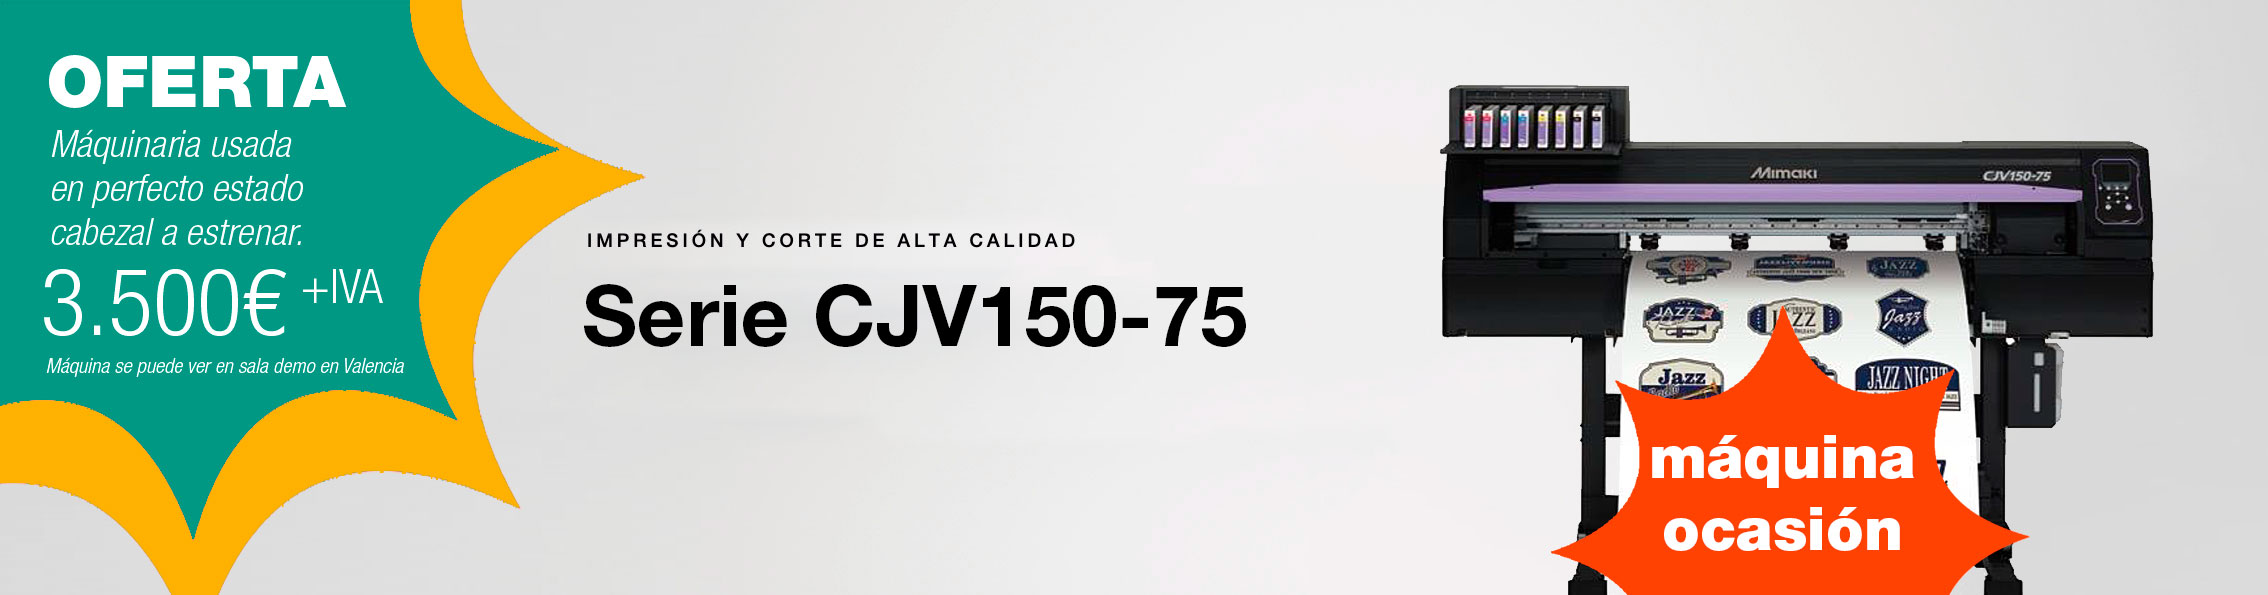 OFERTAS-CJV150-75